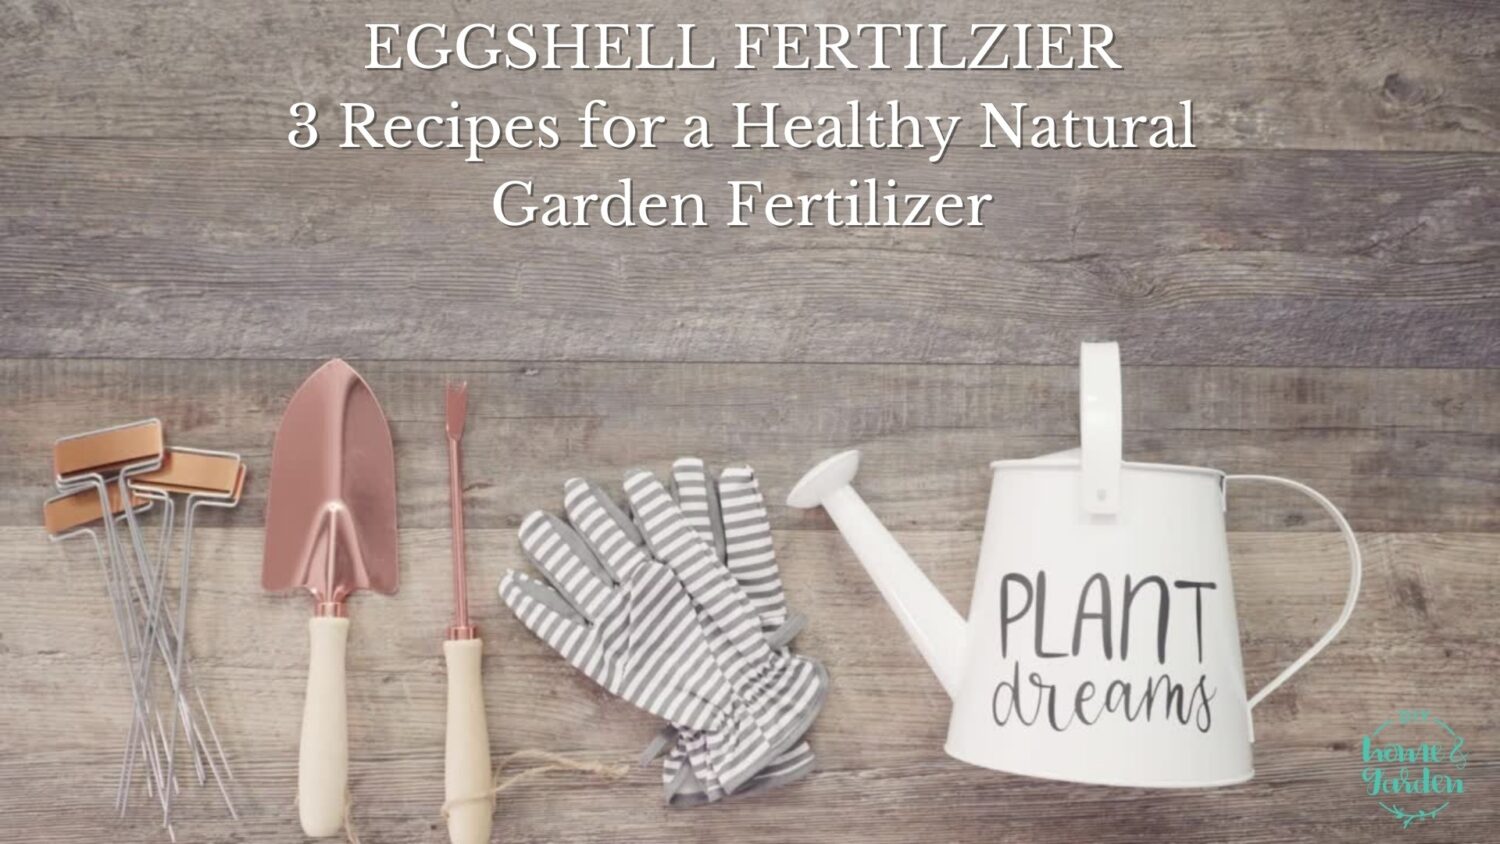 Eggshell Fertilizer: 3 Recipes for a Healthy Natural Garden Fertilizer